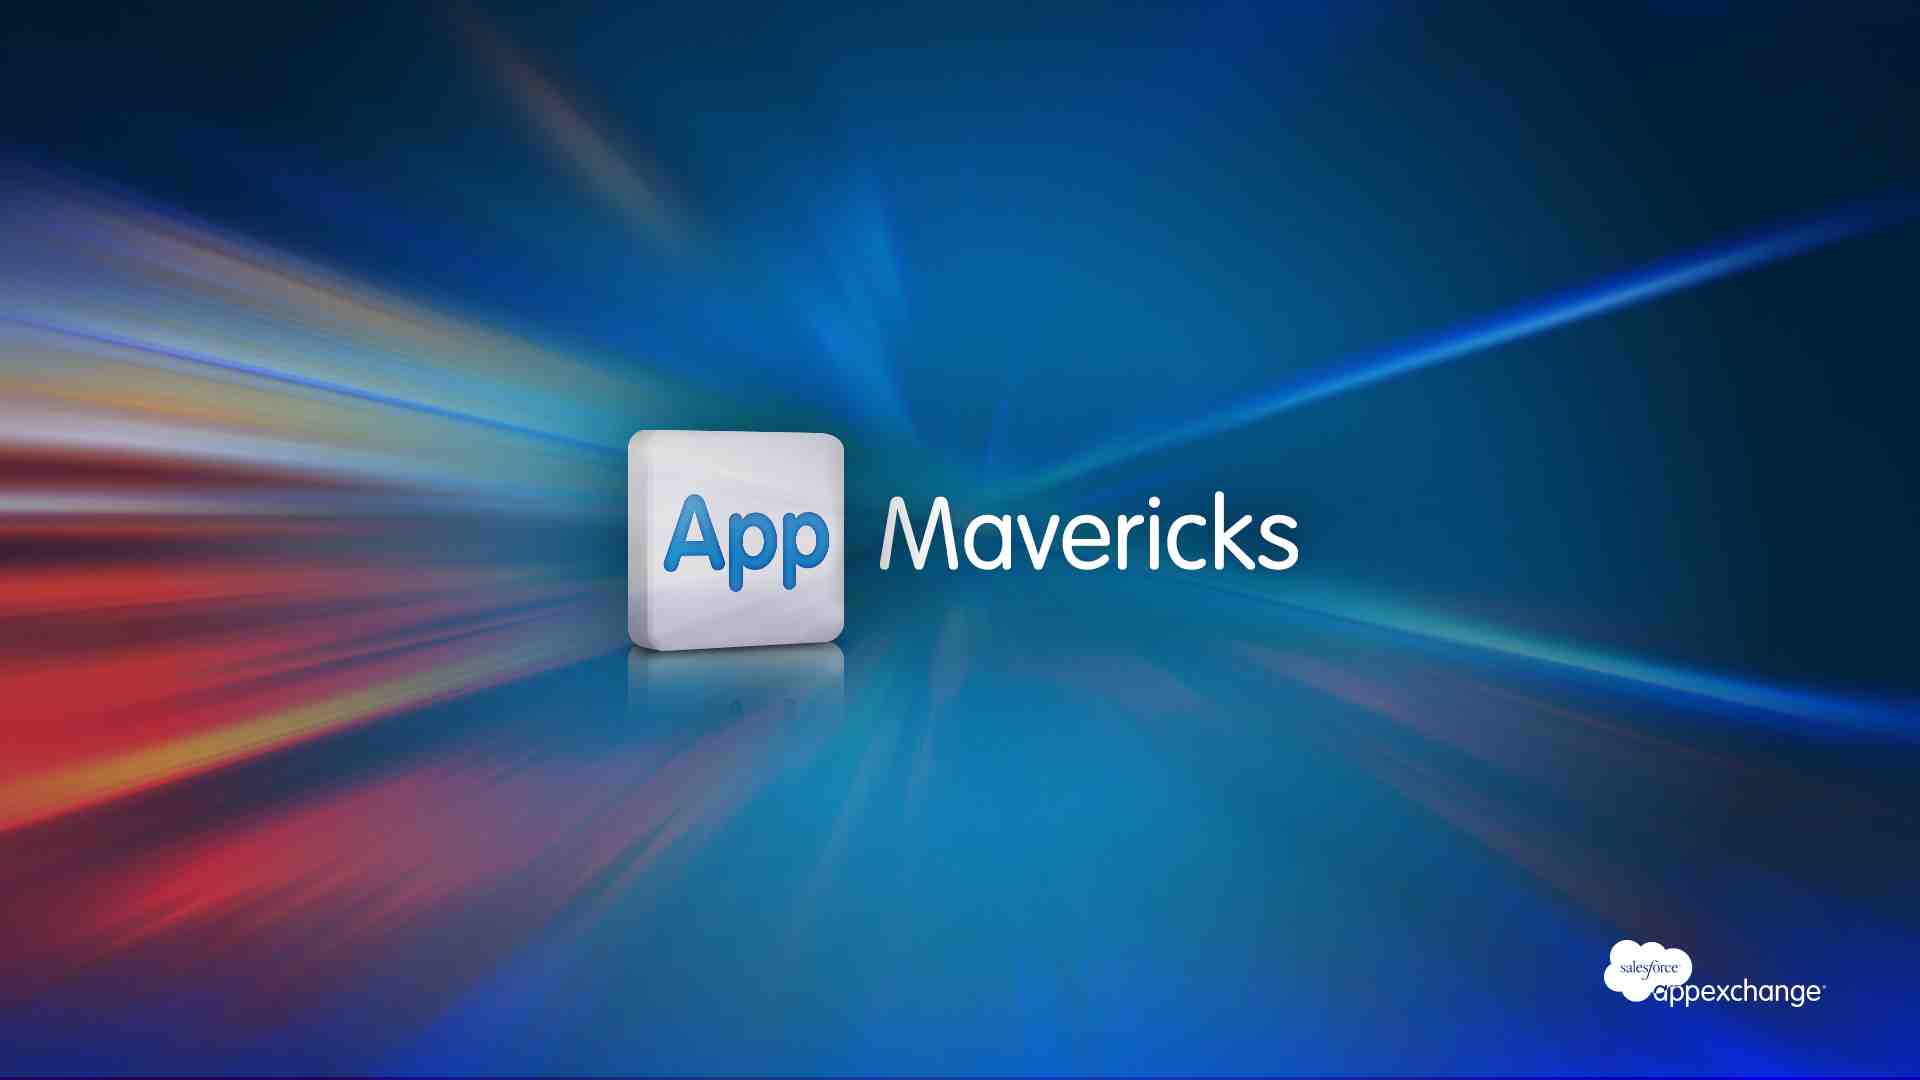 App Mavericks: Create and Distribute Stunning Documents on the Road!